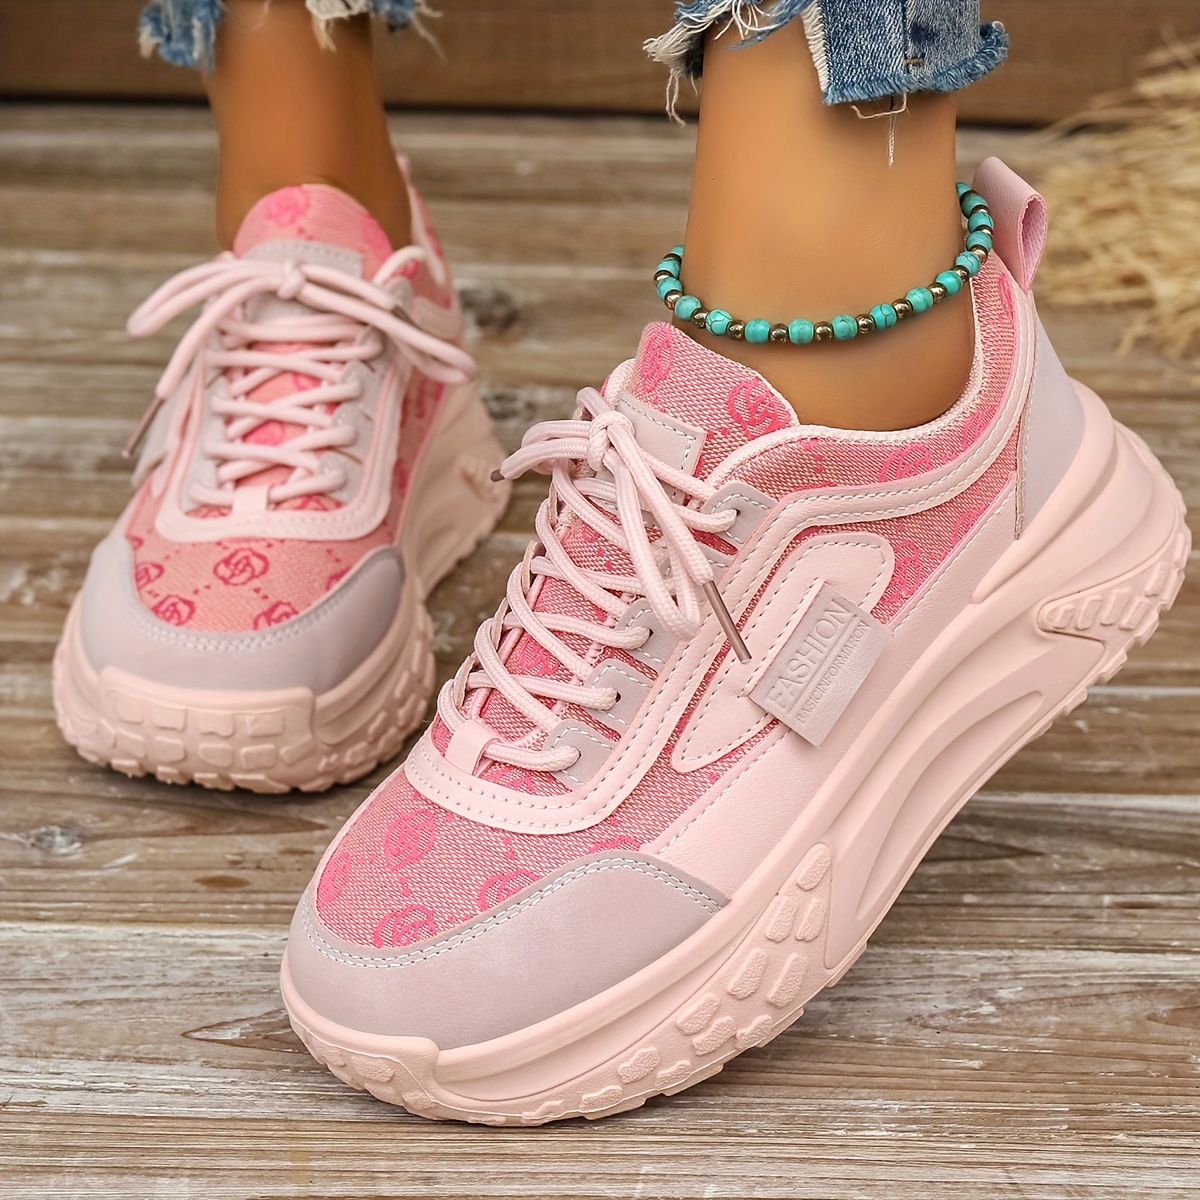 Women s Floral Pattern Sneakers, Lace Up Soft Sole Platform Casual Shoes, Low-top Walking Shoes details 5